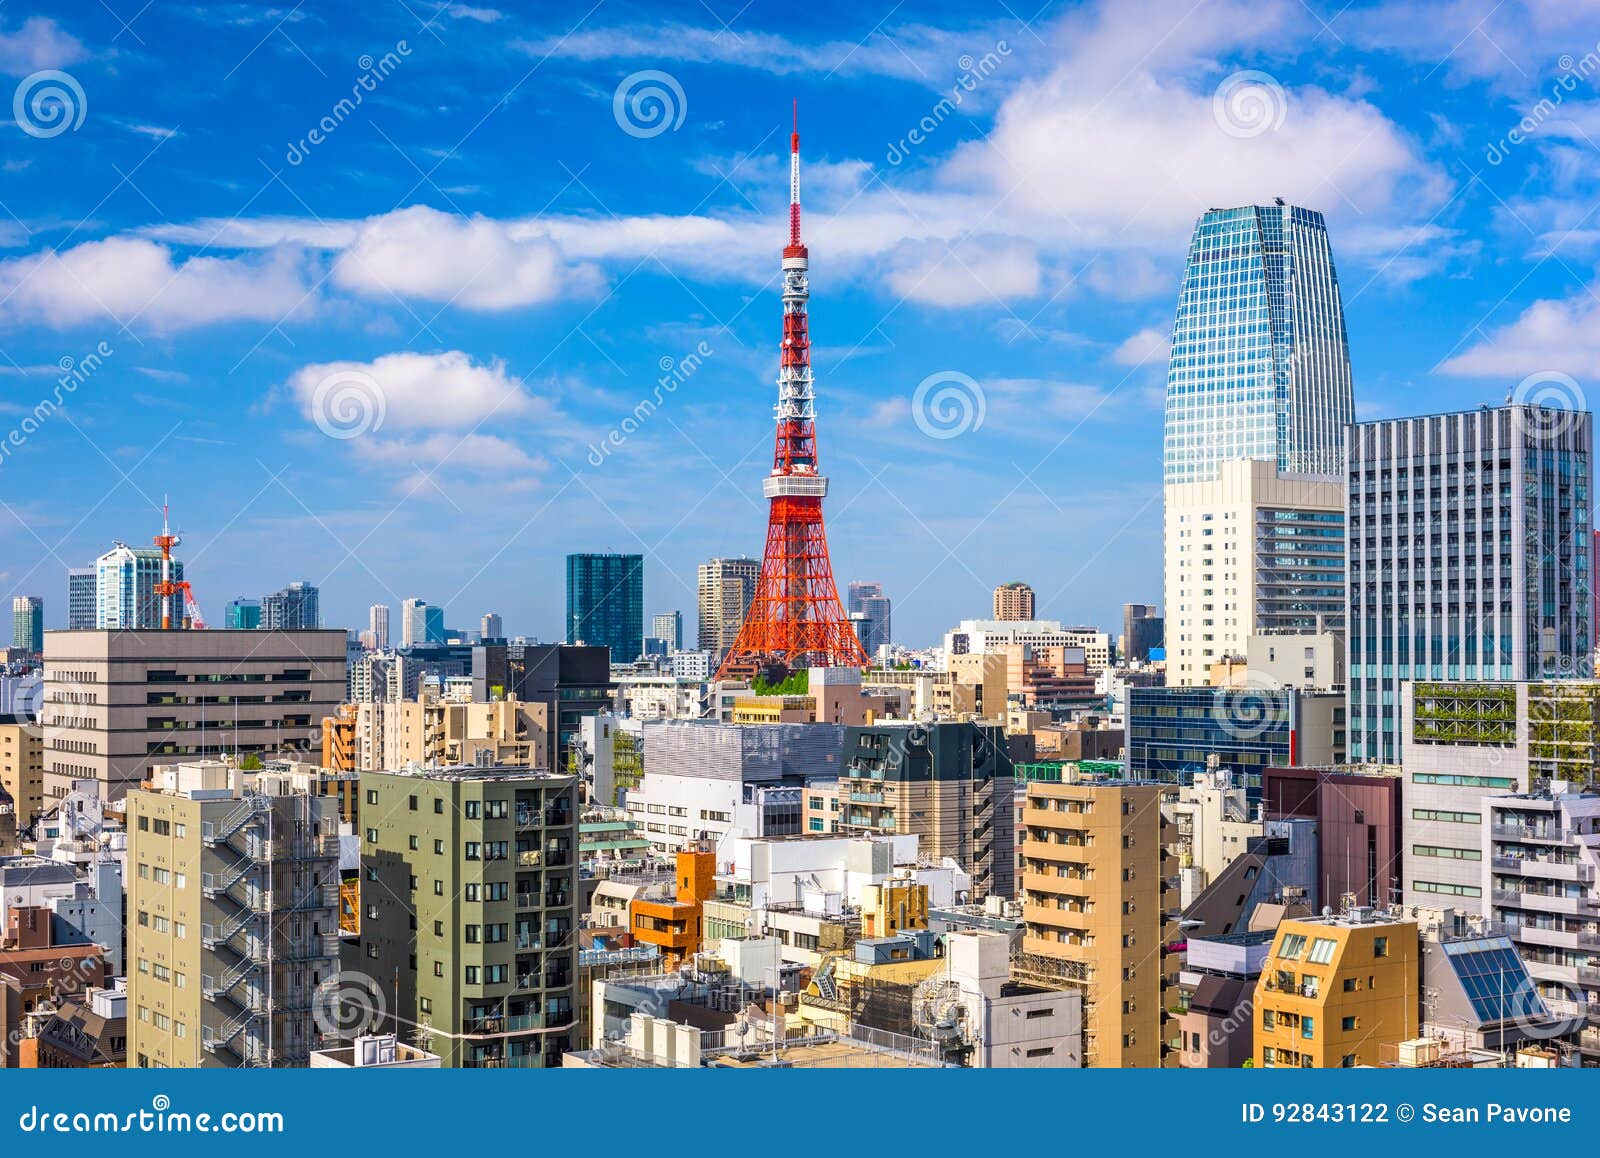 tokyo japan cityscape